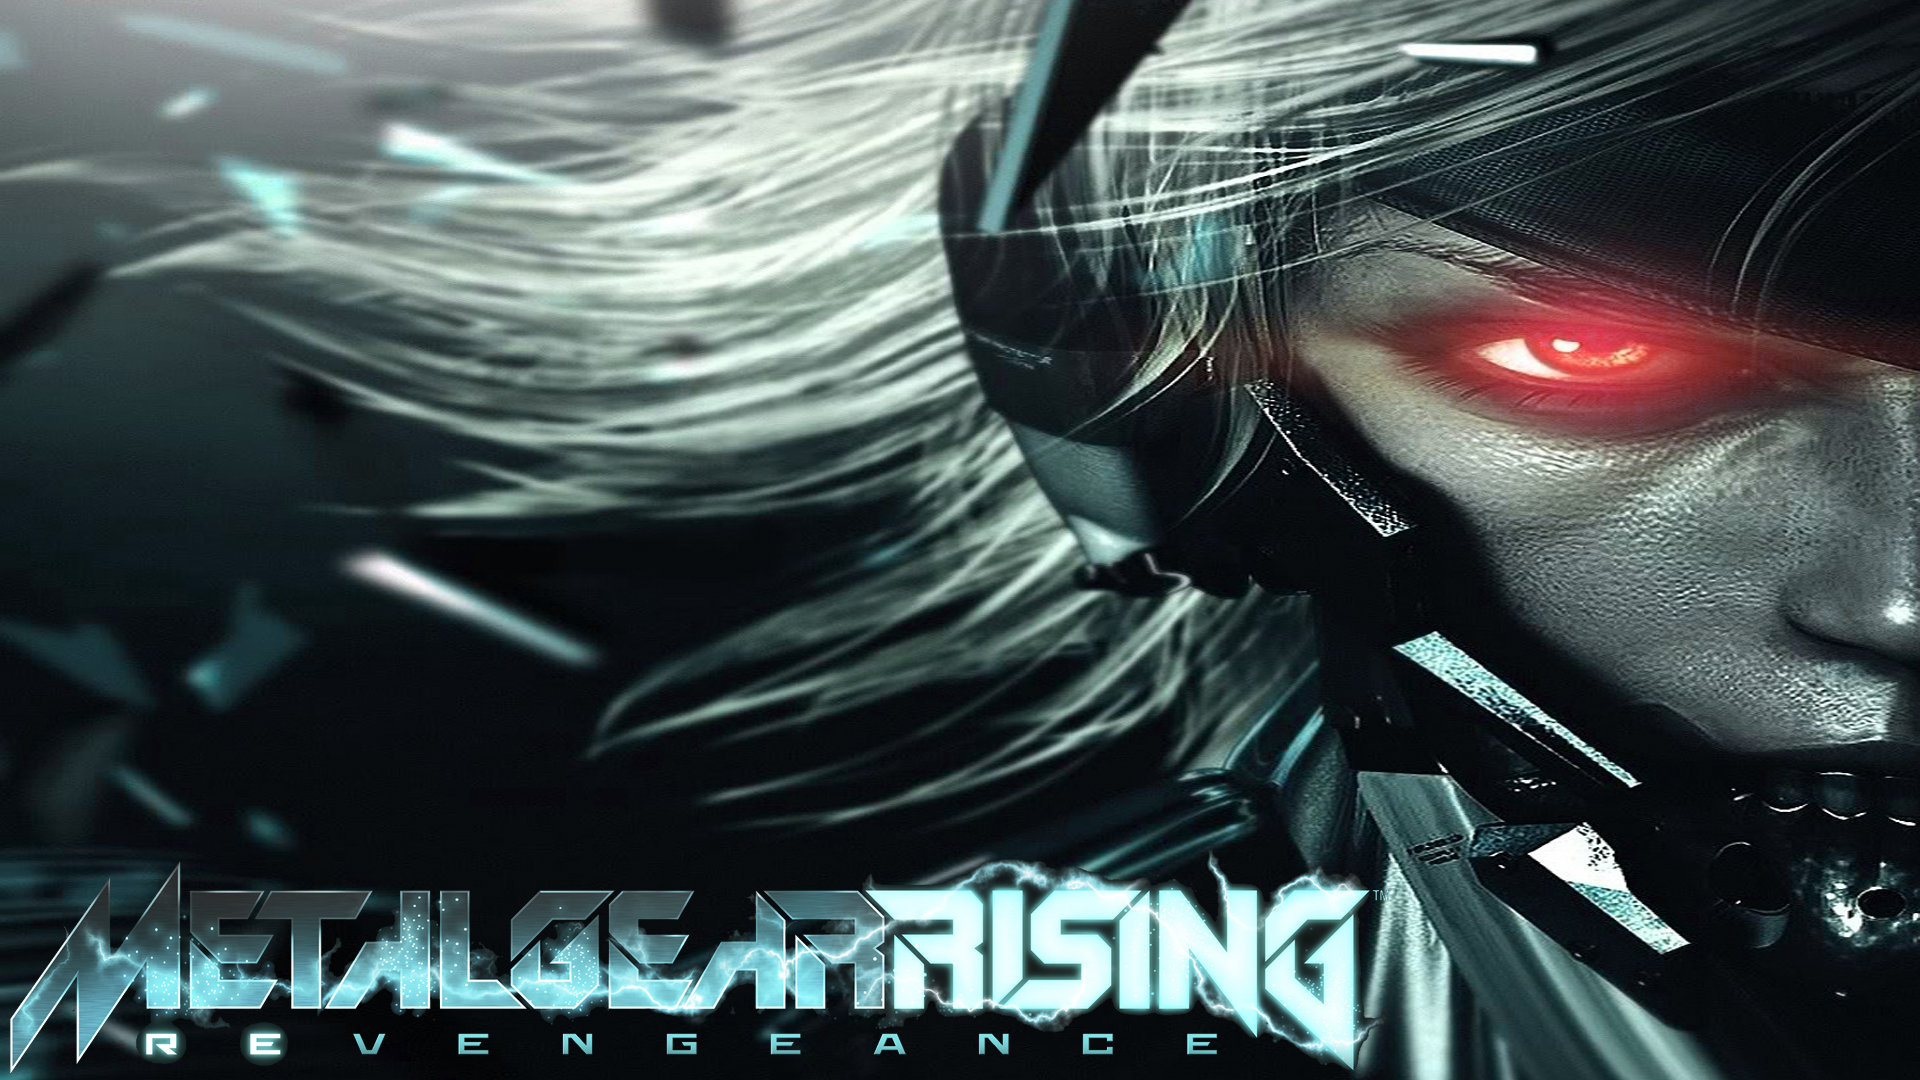 Free download Description Metal Gear Rising Background is a hi res. wallpap...